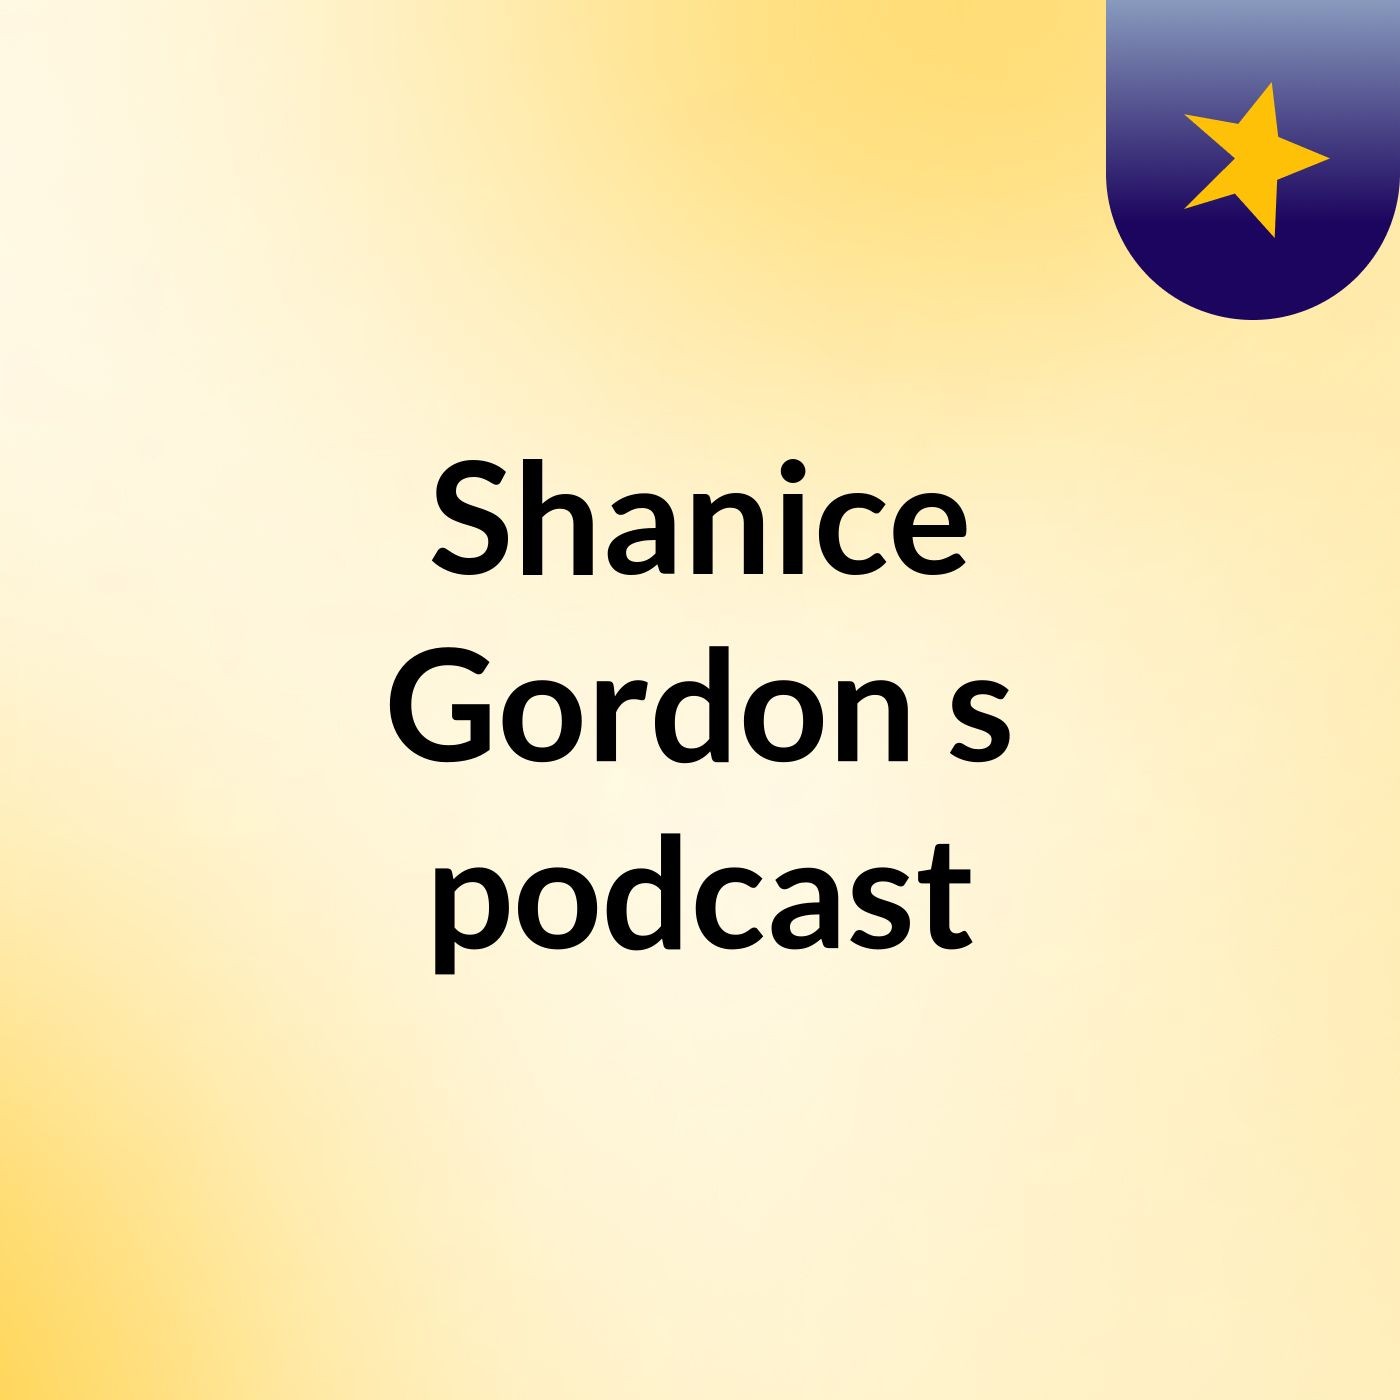 Episode 2 - Shanice Gordon's podcast